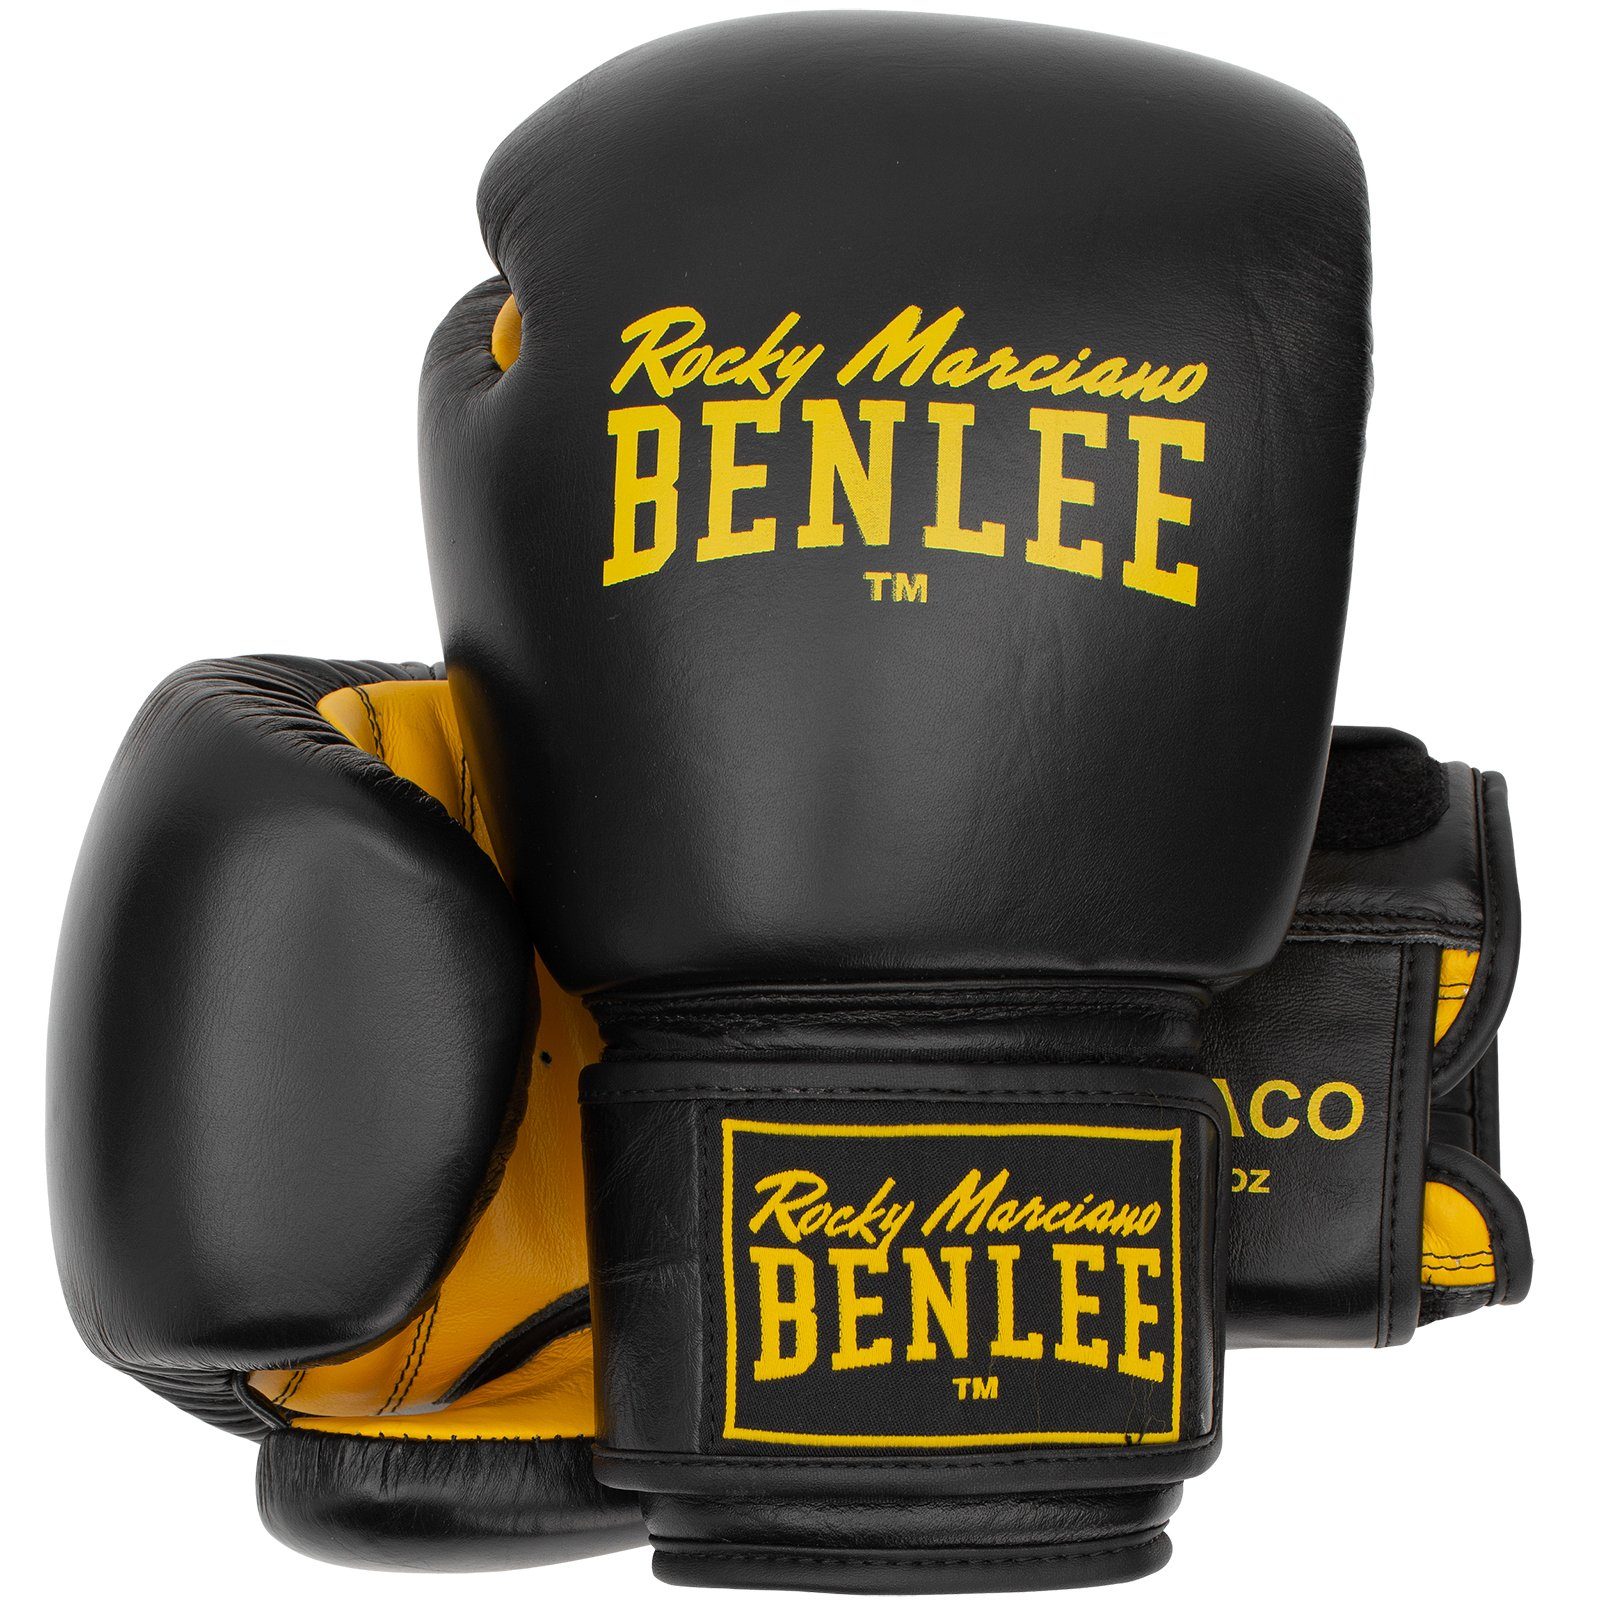 Benlee Rocky Marciano Boxhandschuhe DRACO Black/Yellow